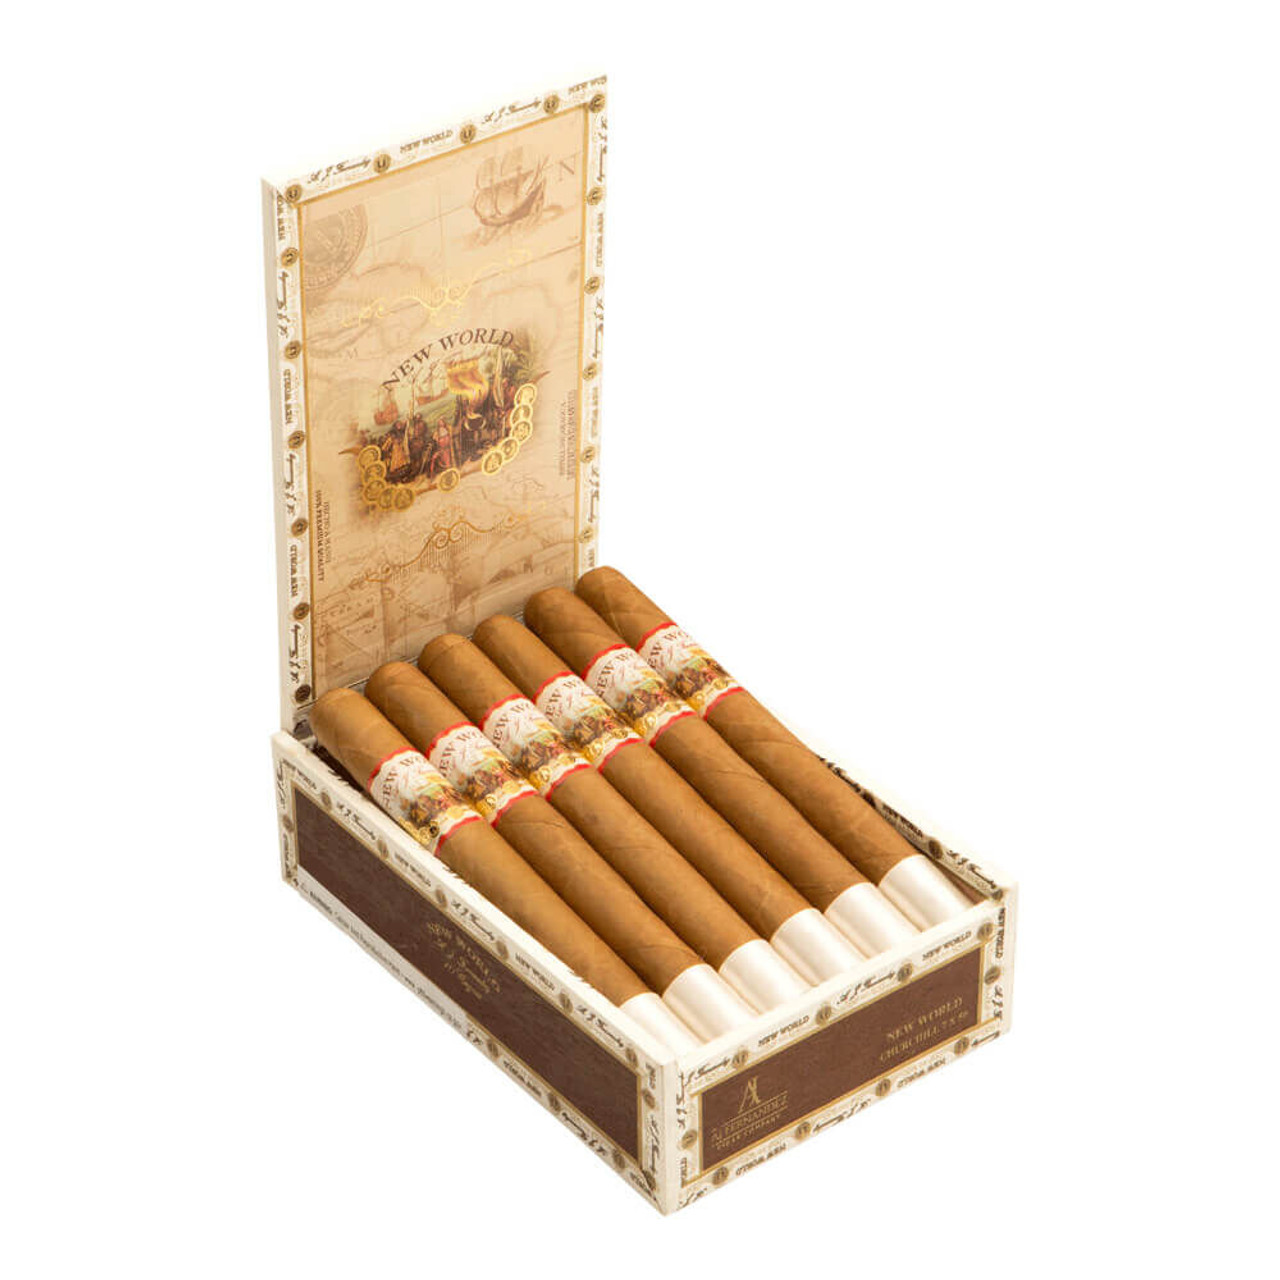 New World Connecticut by AJ Fernandez Churchill Cigars - 7 x 55 (Box of 10) Open